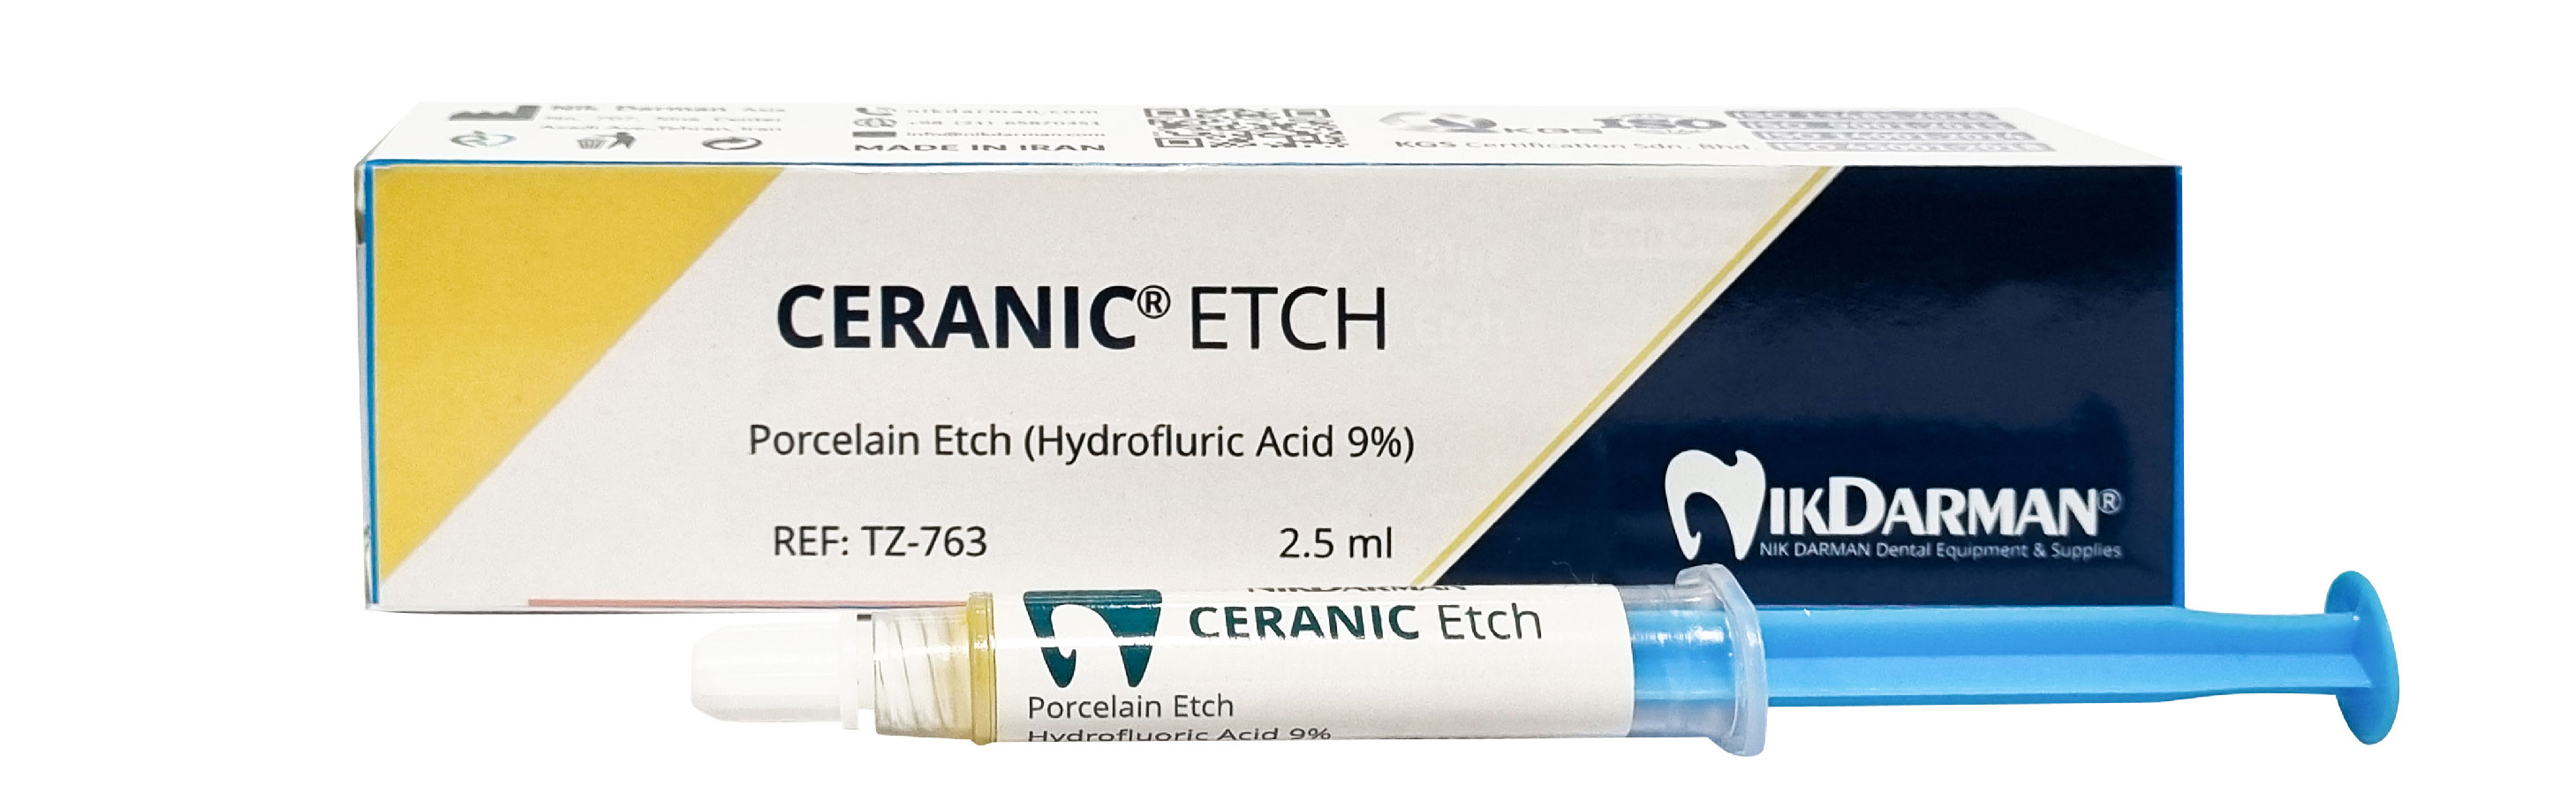 Nik Darman - Ceranic Etch Acid Hydrofluoric Gel 9%